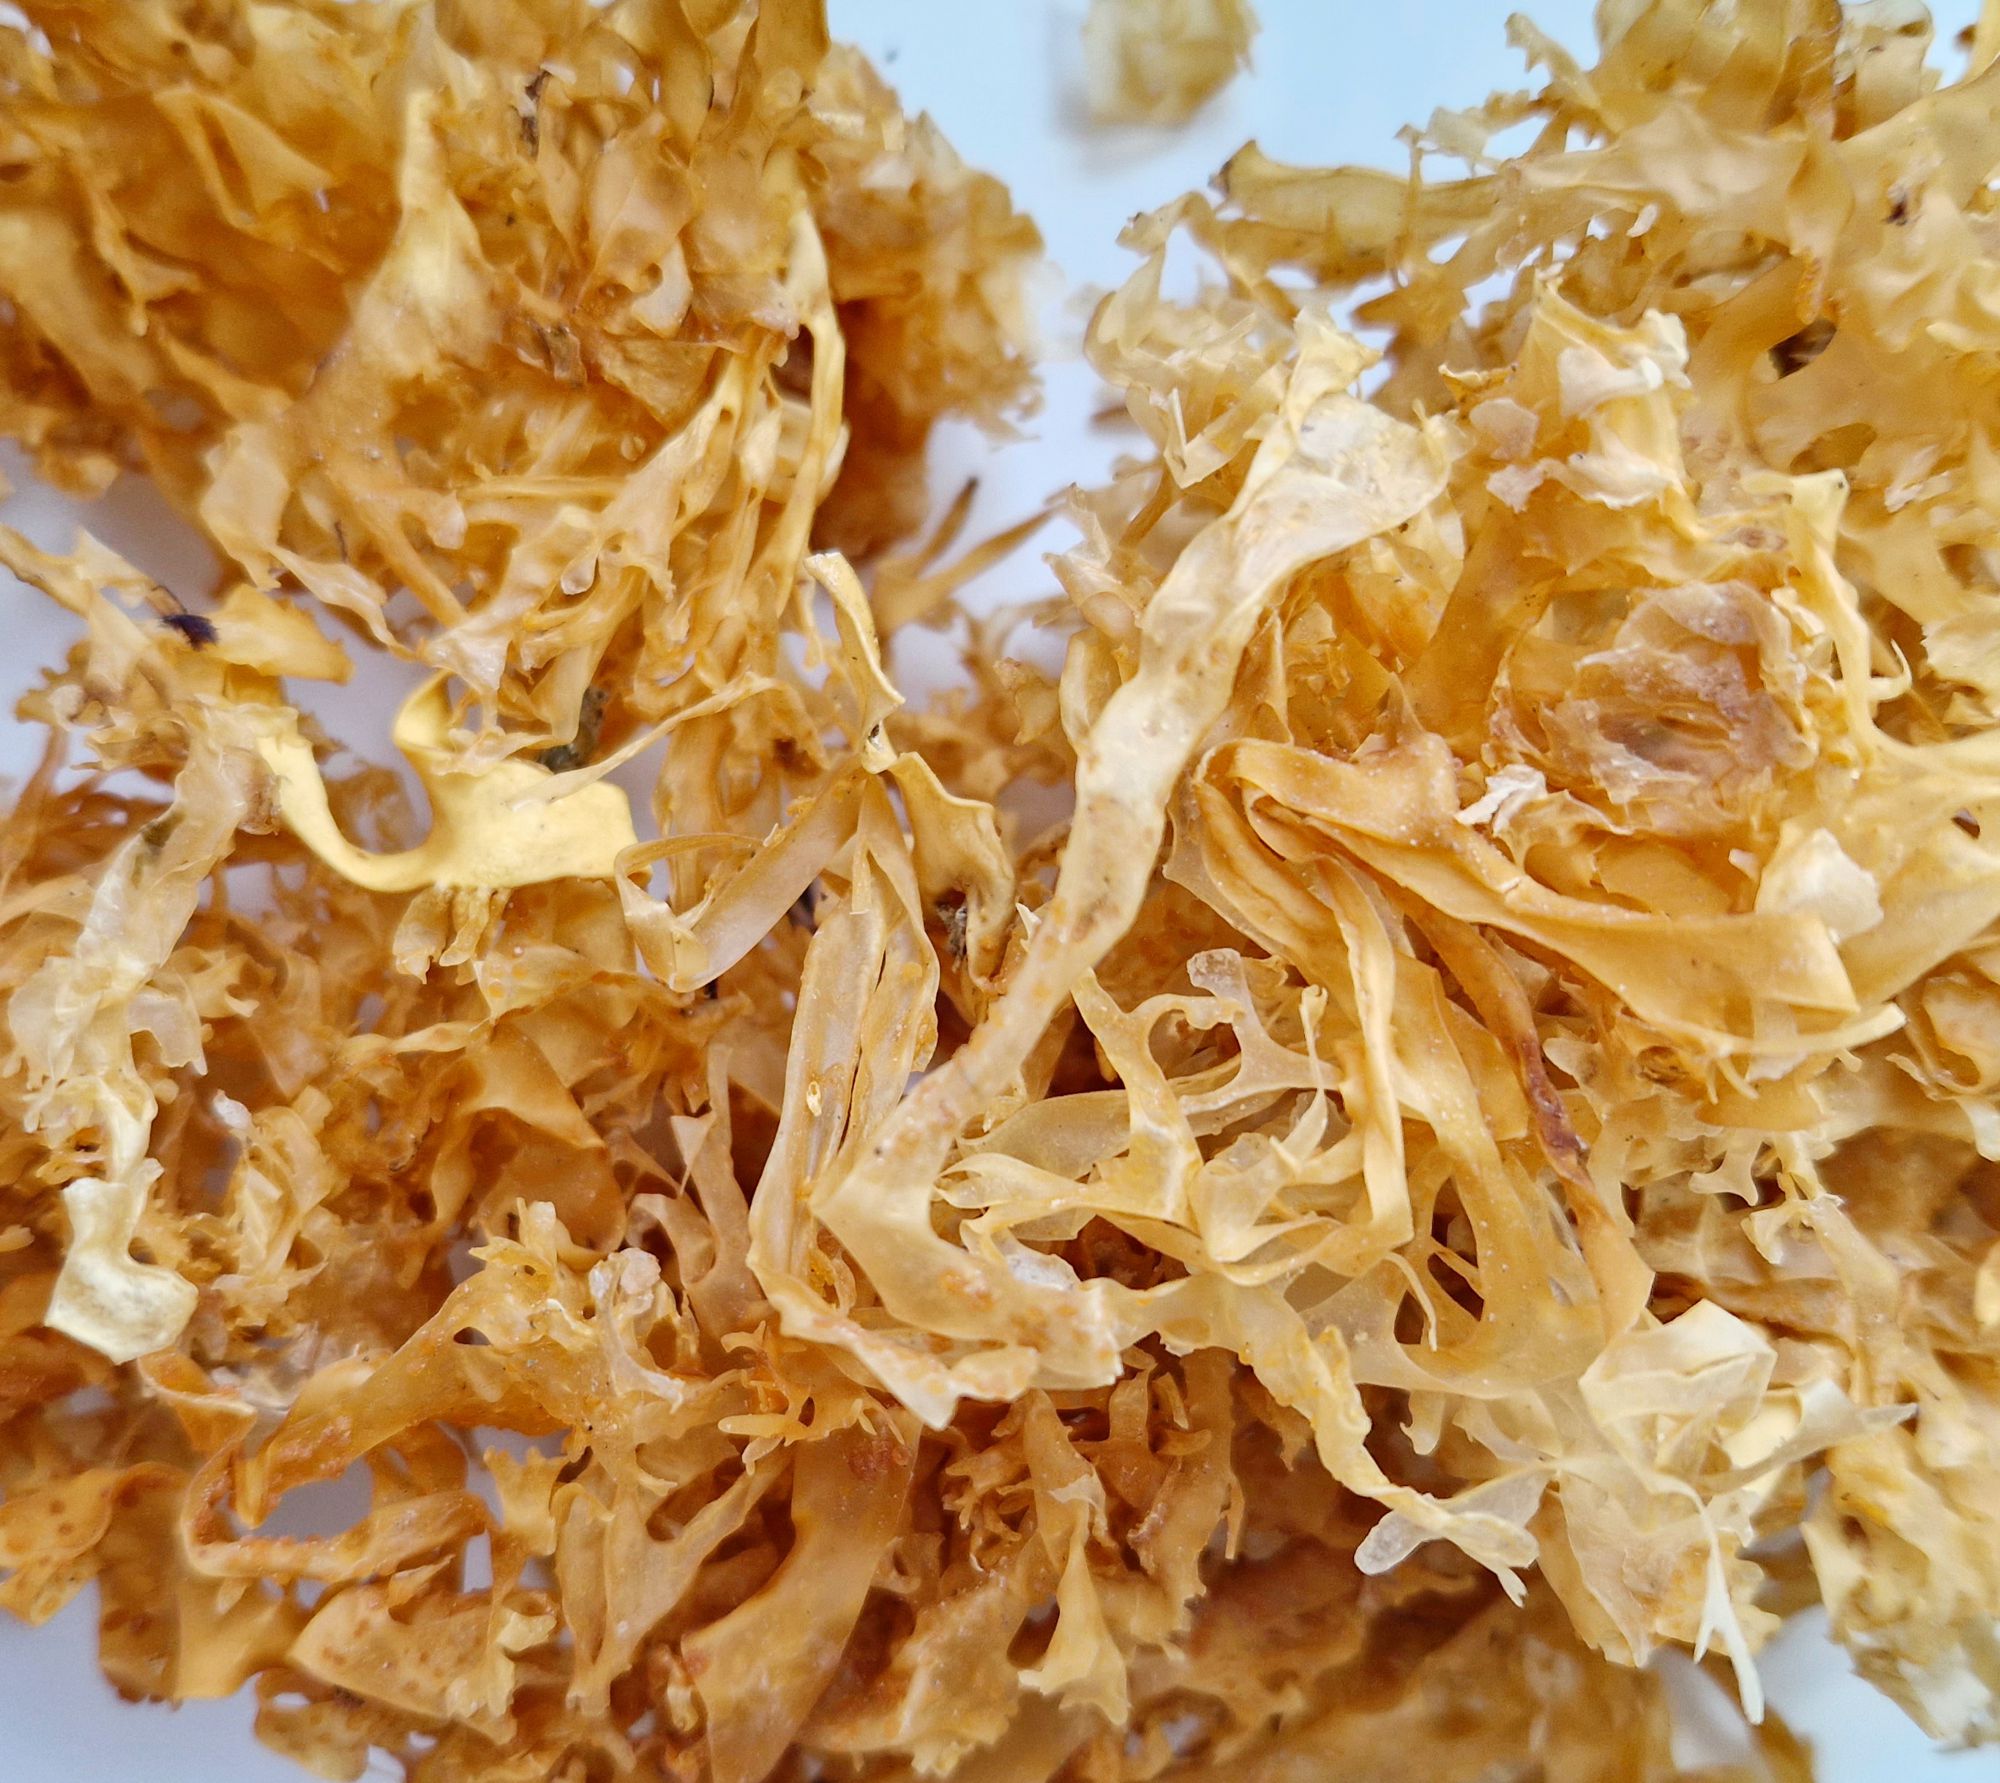 Organic Irish Sea Moss - Versatile Atlantic Seaweed for Cooking